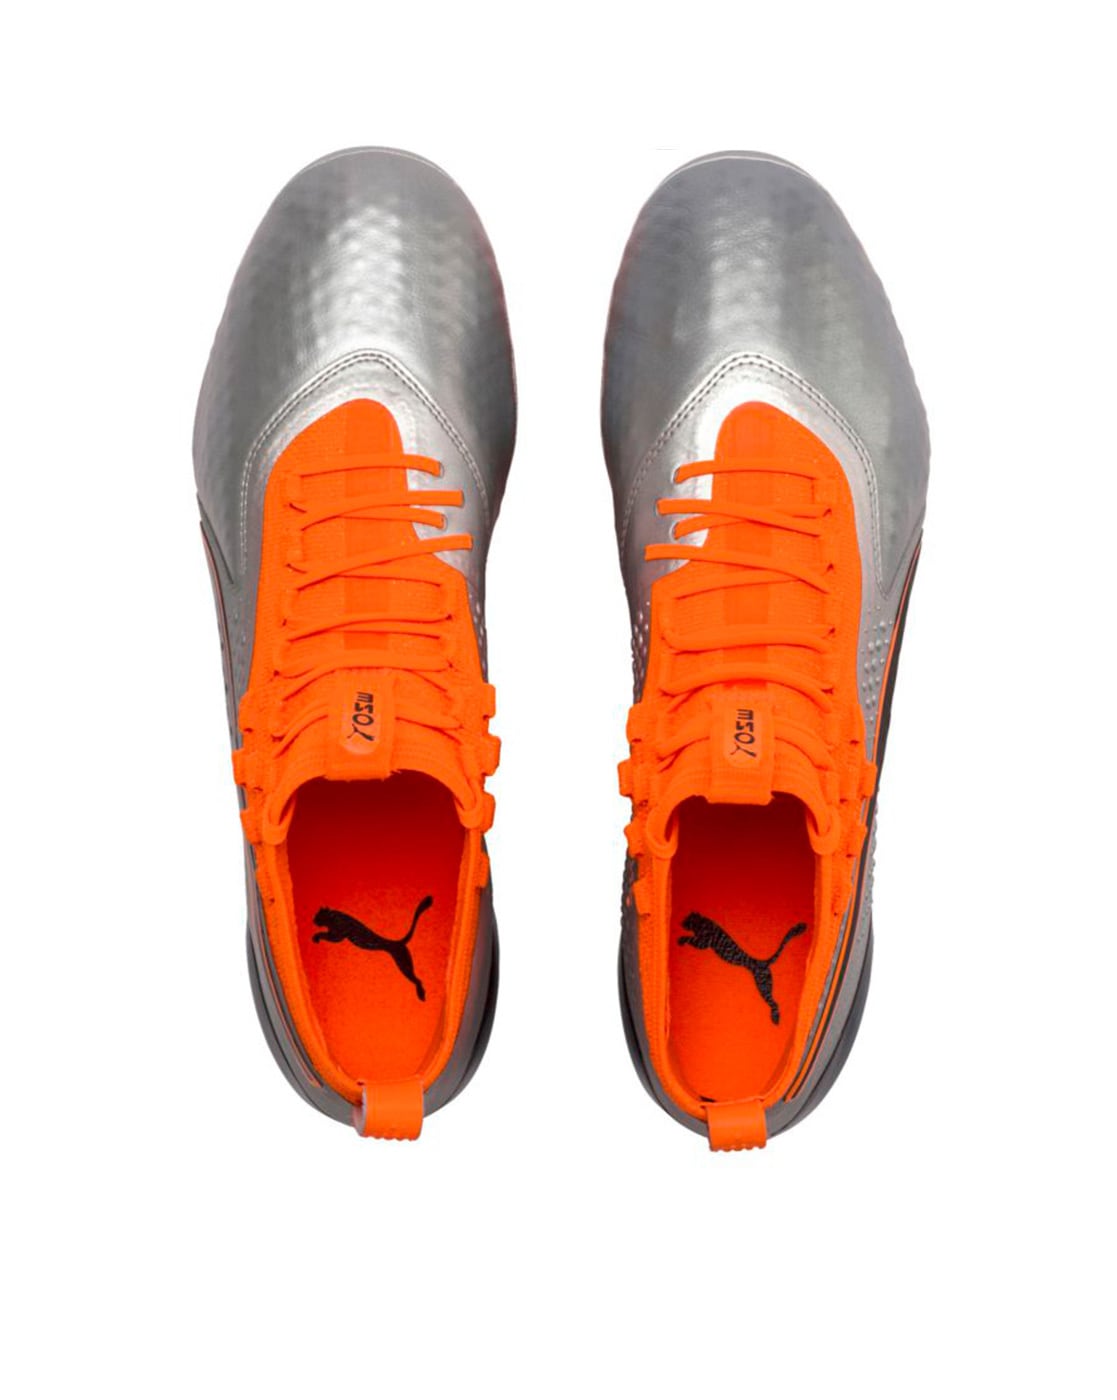 orange puma sneakers